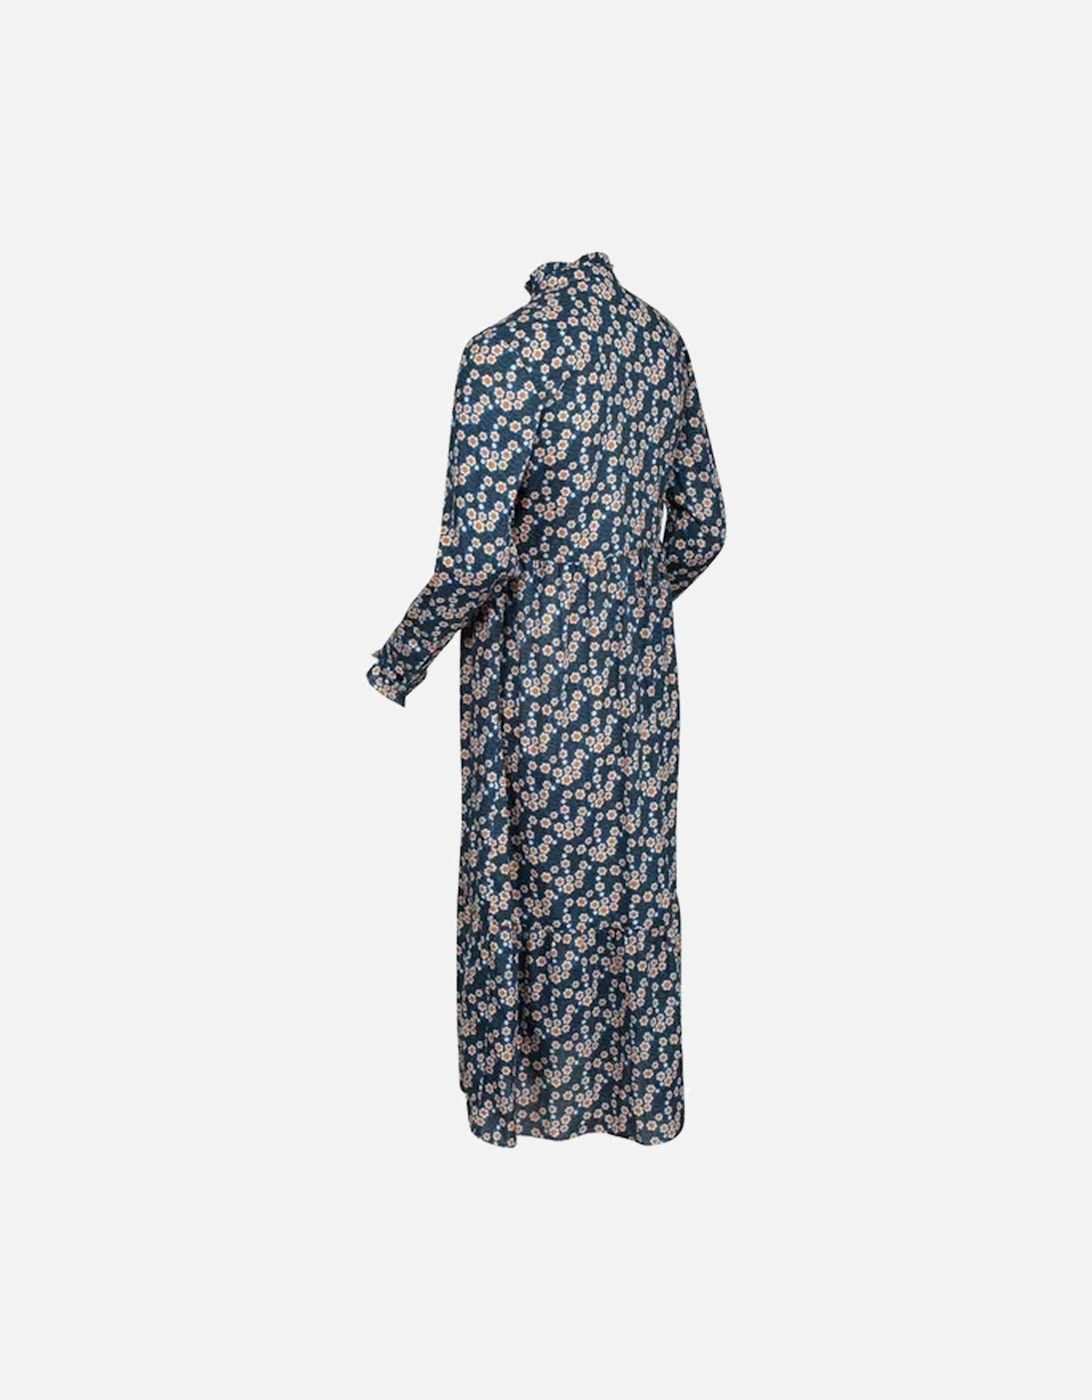 Womens/Ladies Orla Kiely Water Floral Long-Sleeved Midi Dress